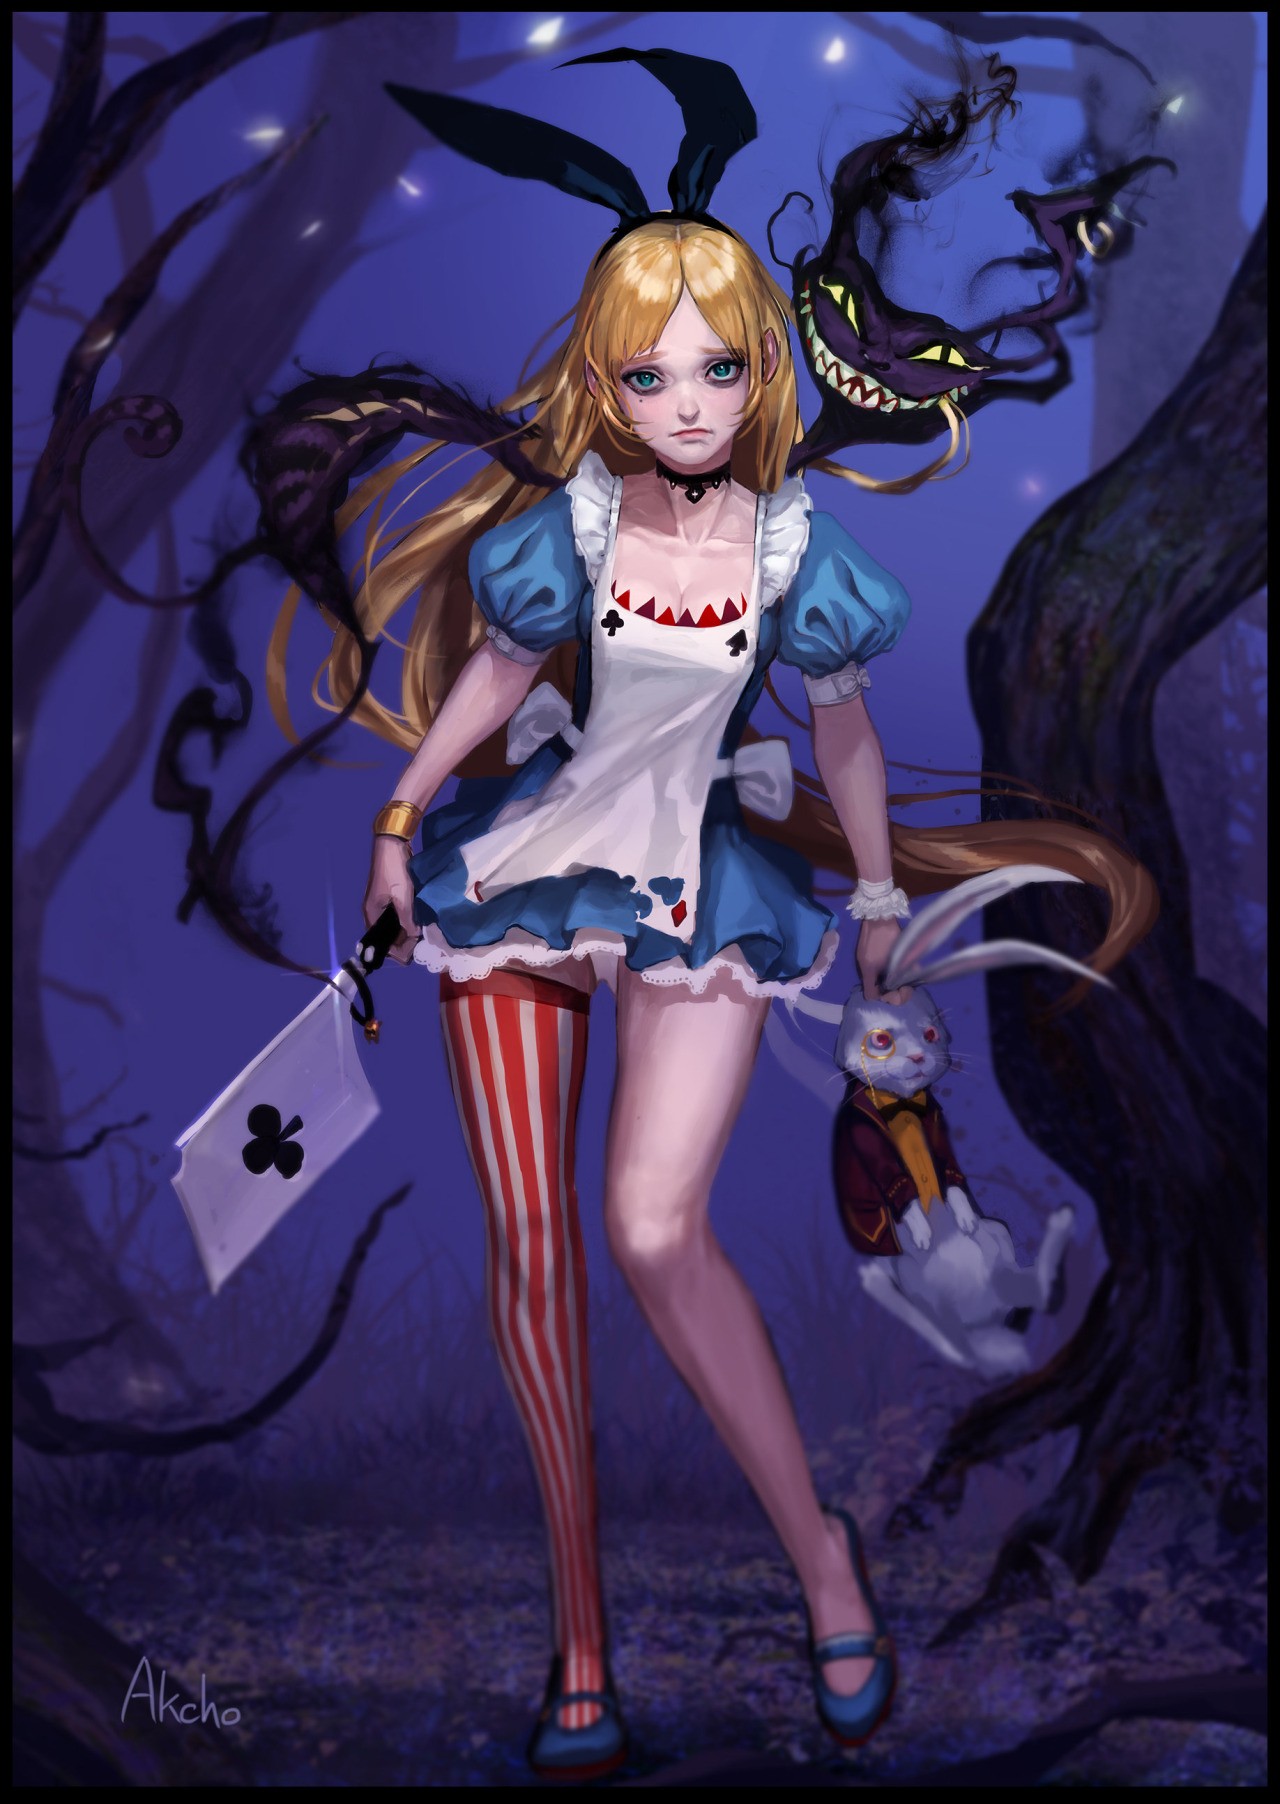 General 1280x1804 Alice in Wonderland anime girls blonde fantasy girl fantasy art legs bunny ears dress stockings striped stockings